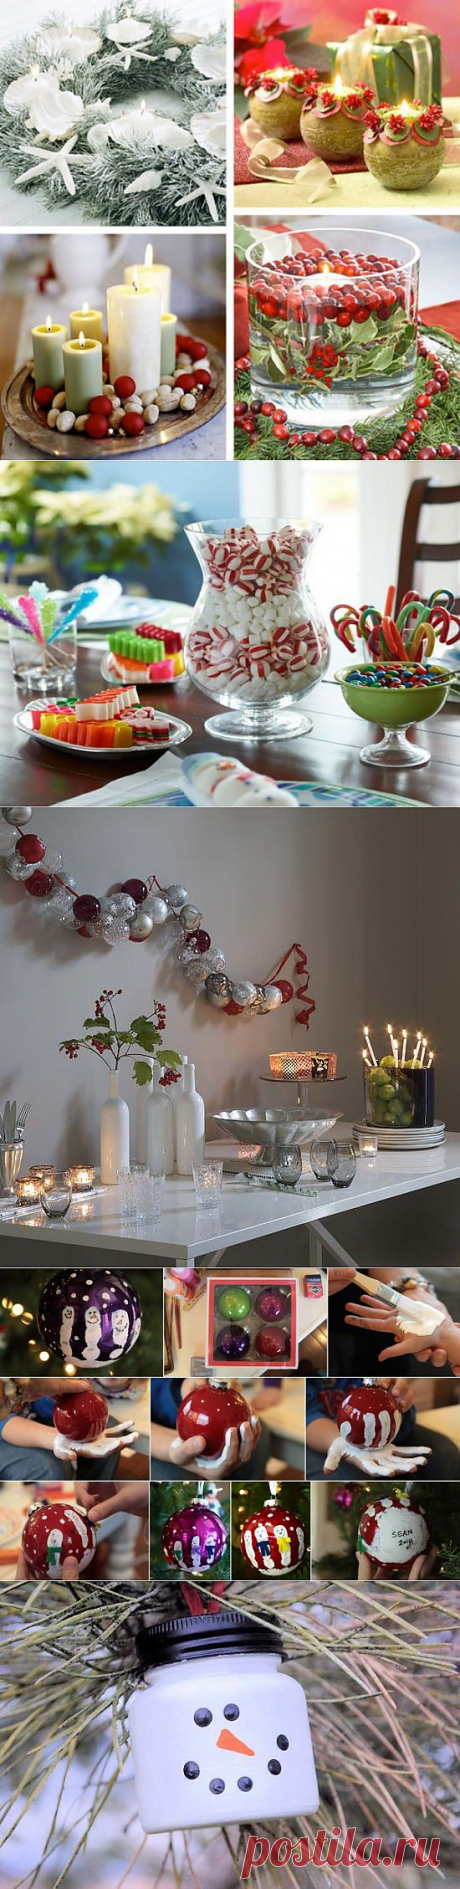 Christmas Decorations IdeasModern Home Interior Design